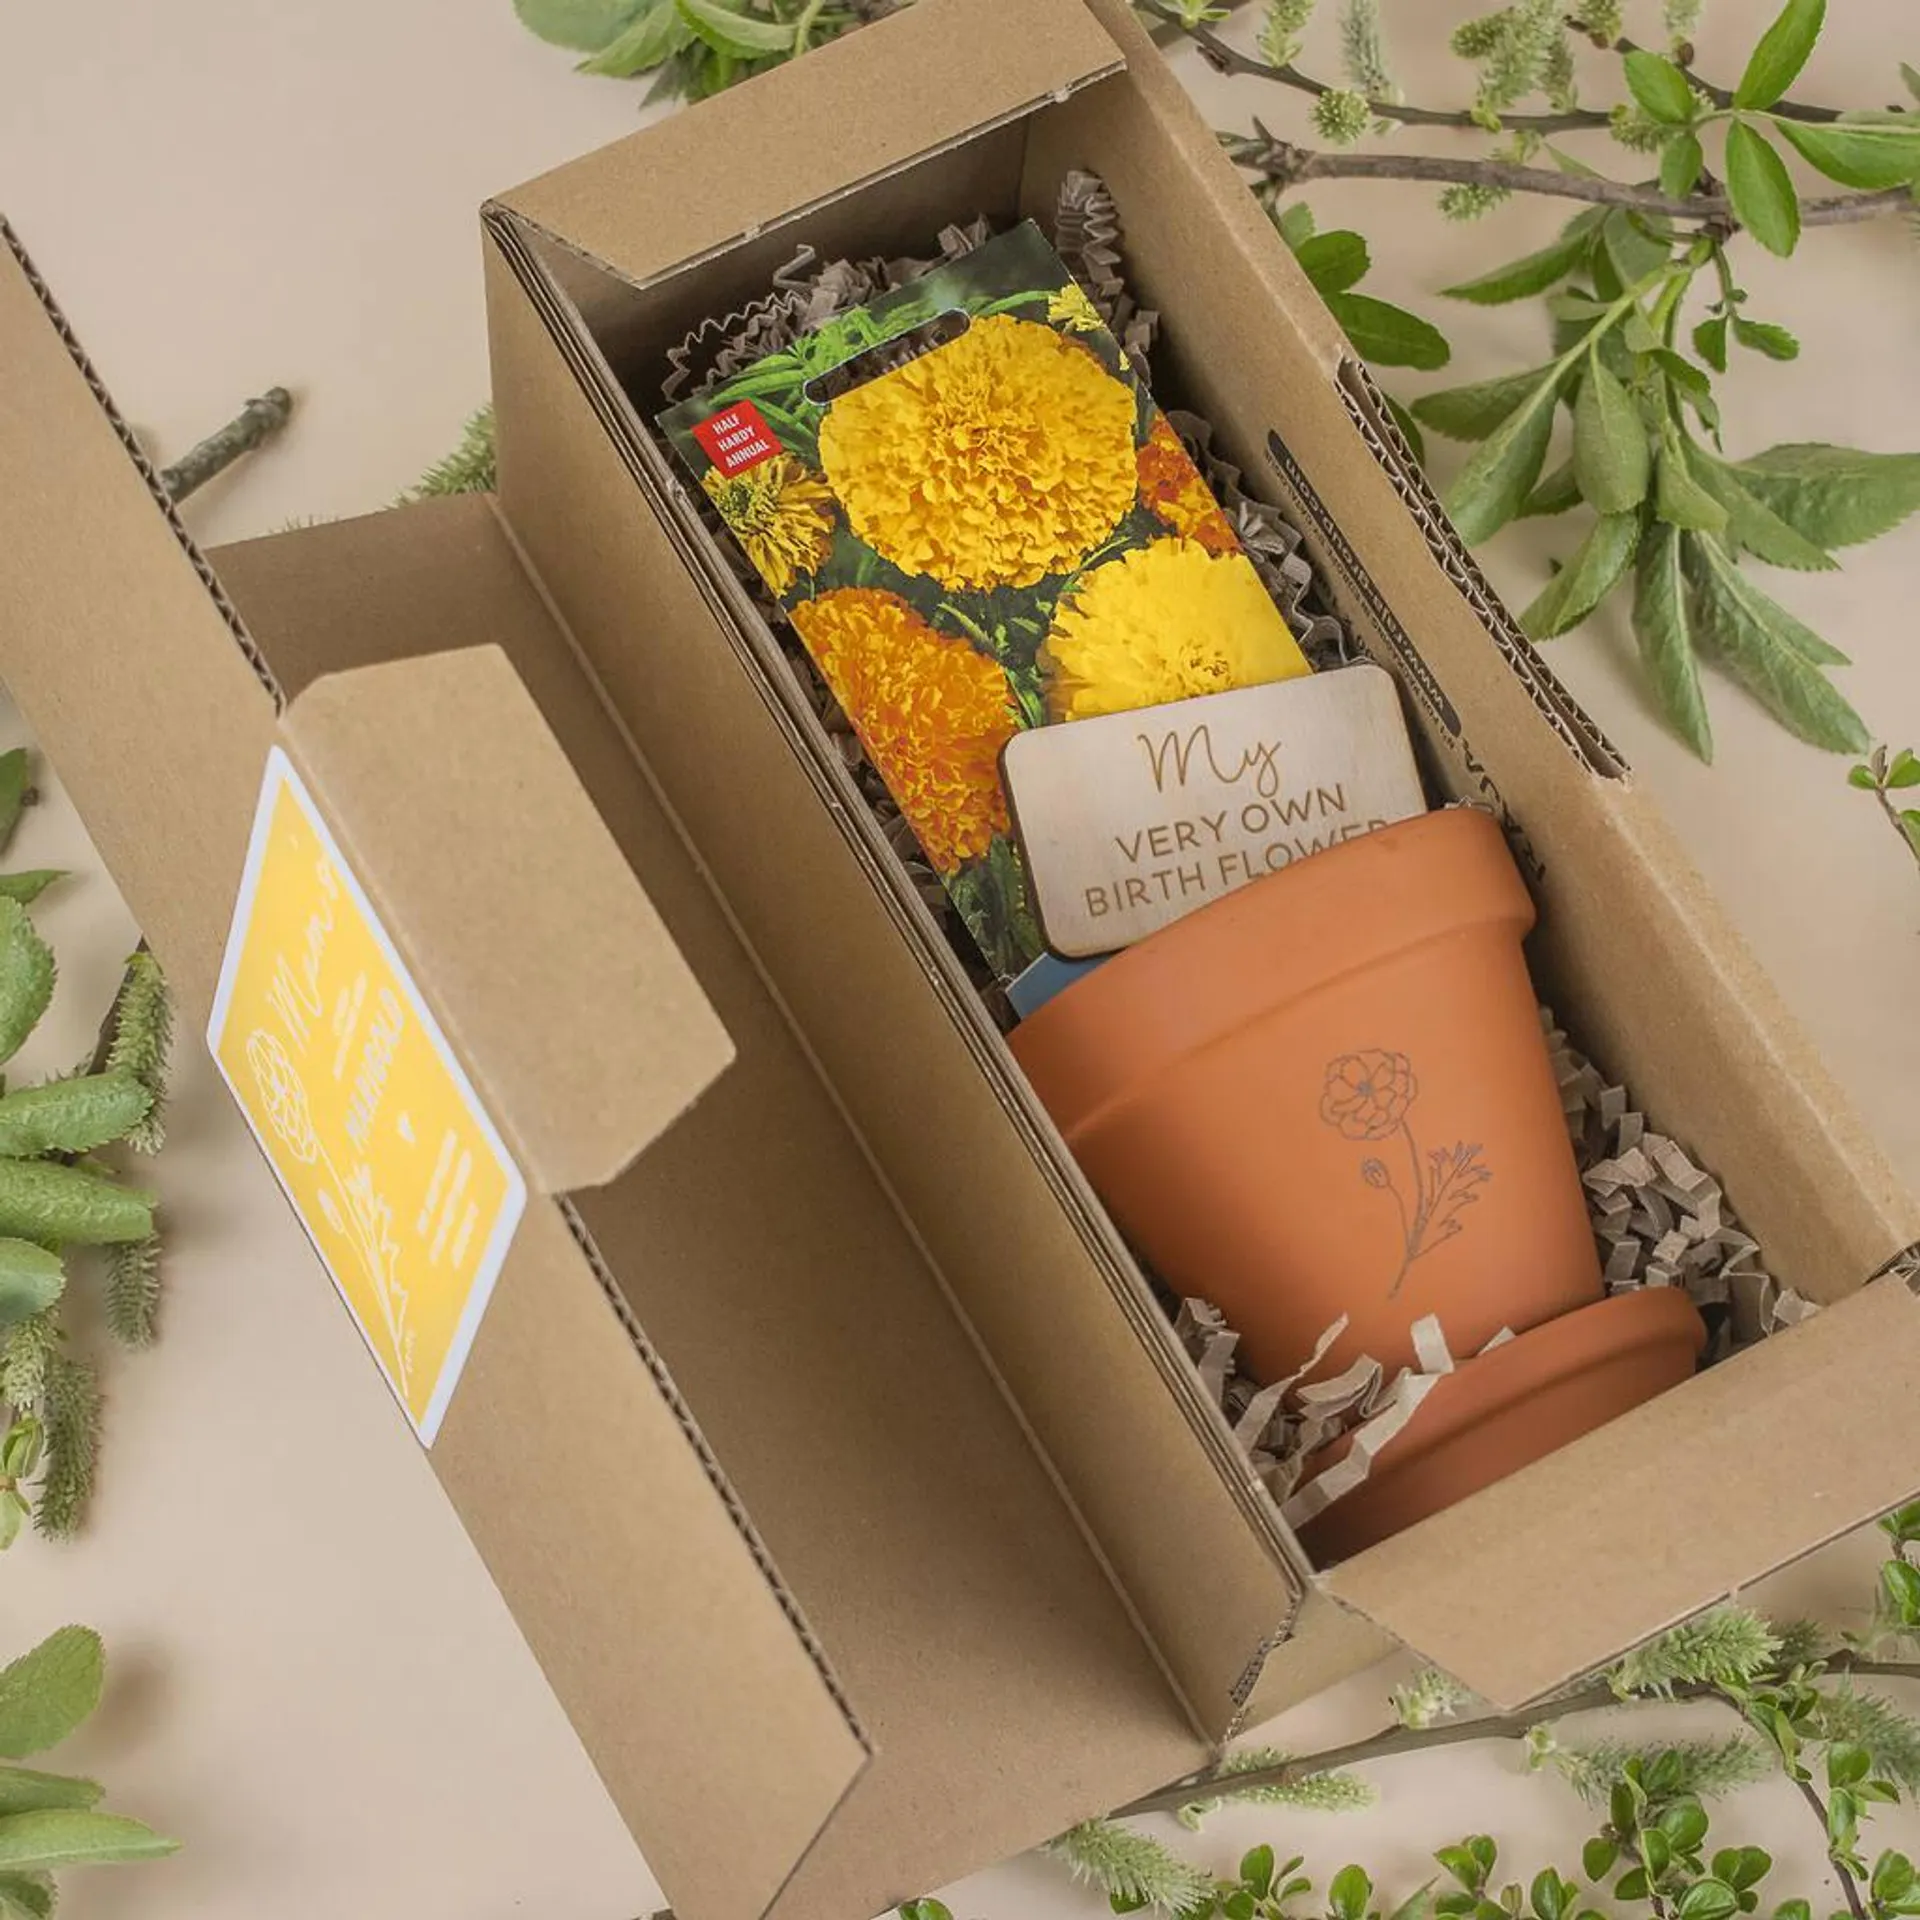 Birth Flower Seed Box Gift Set